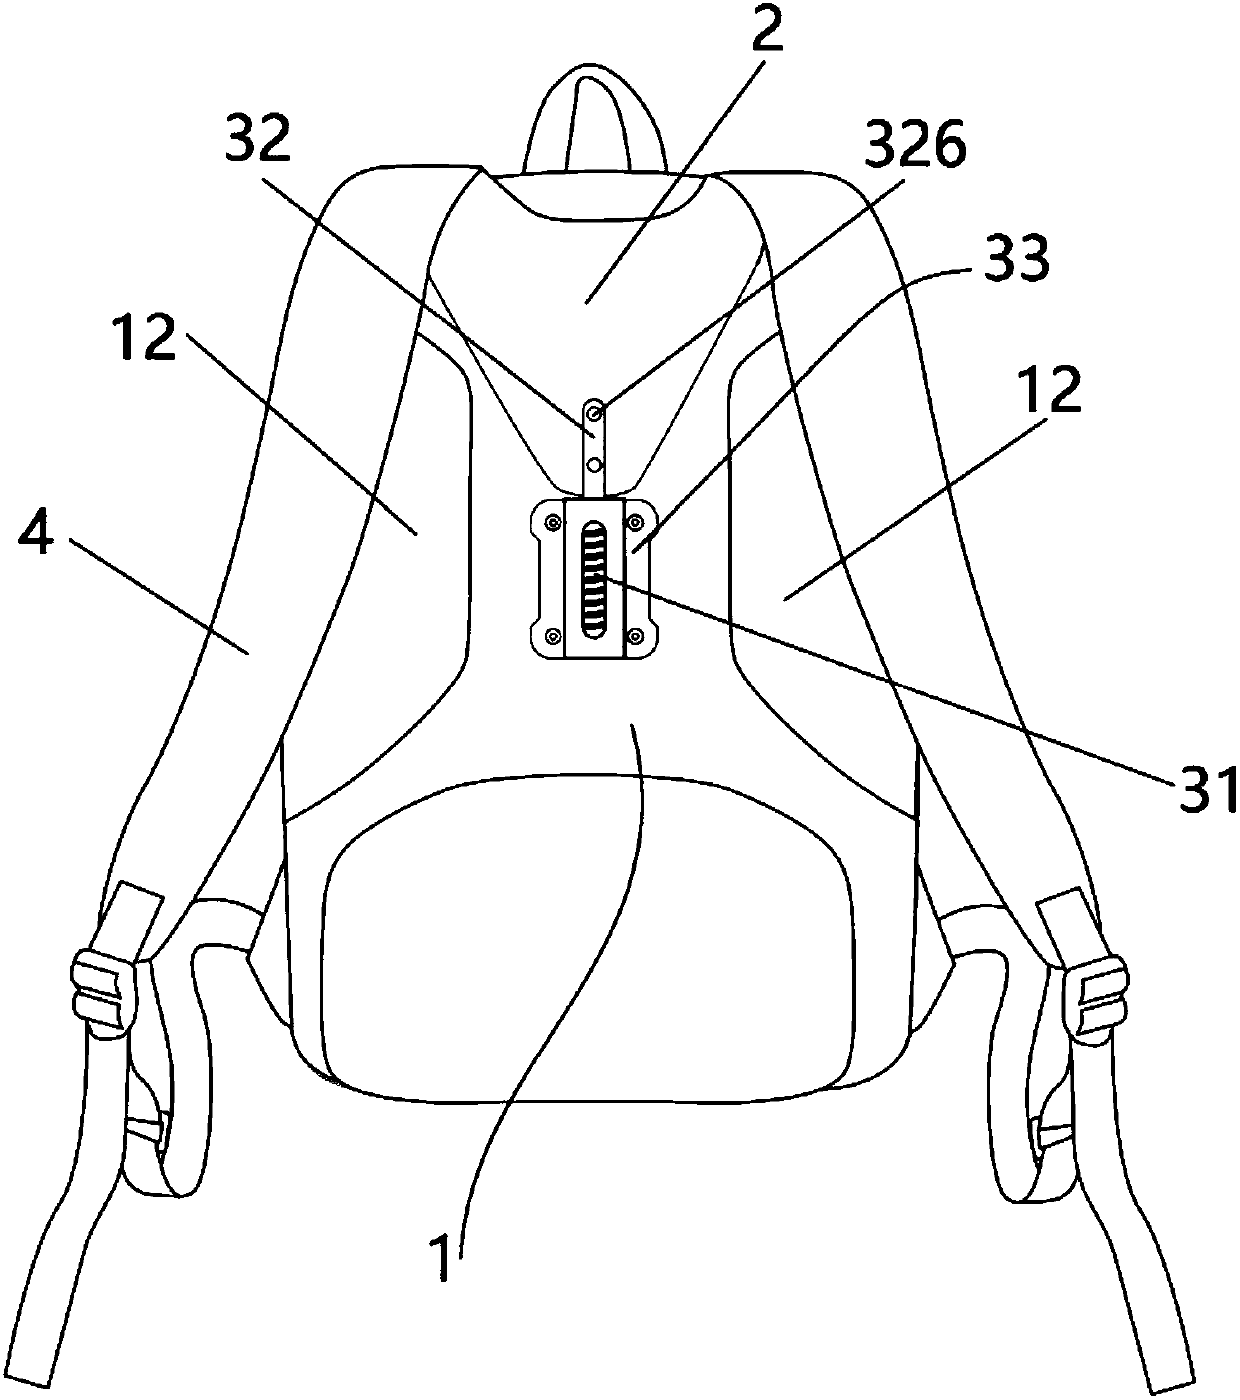 Pressure reduction backpack